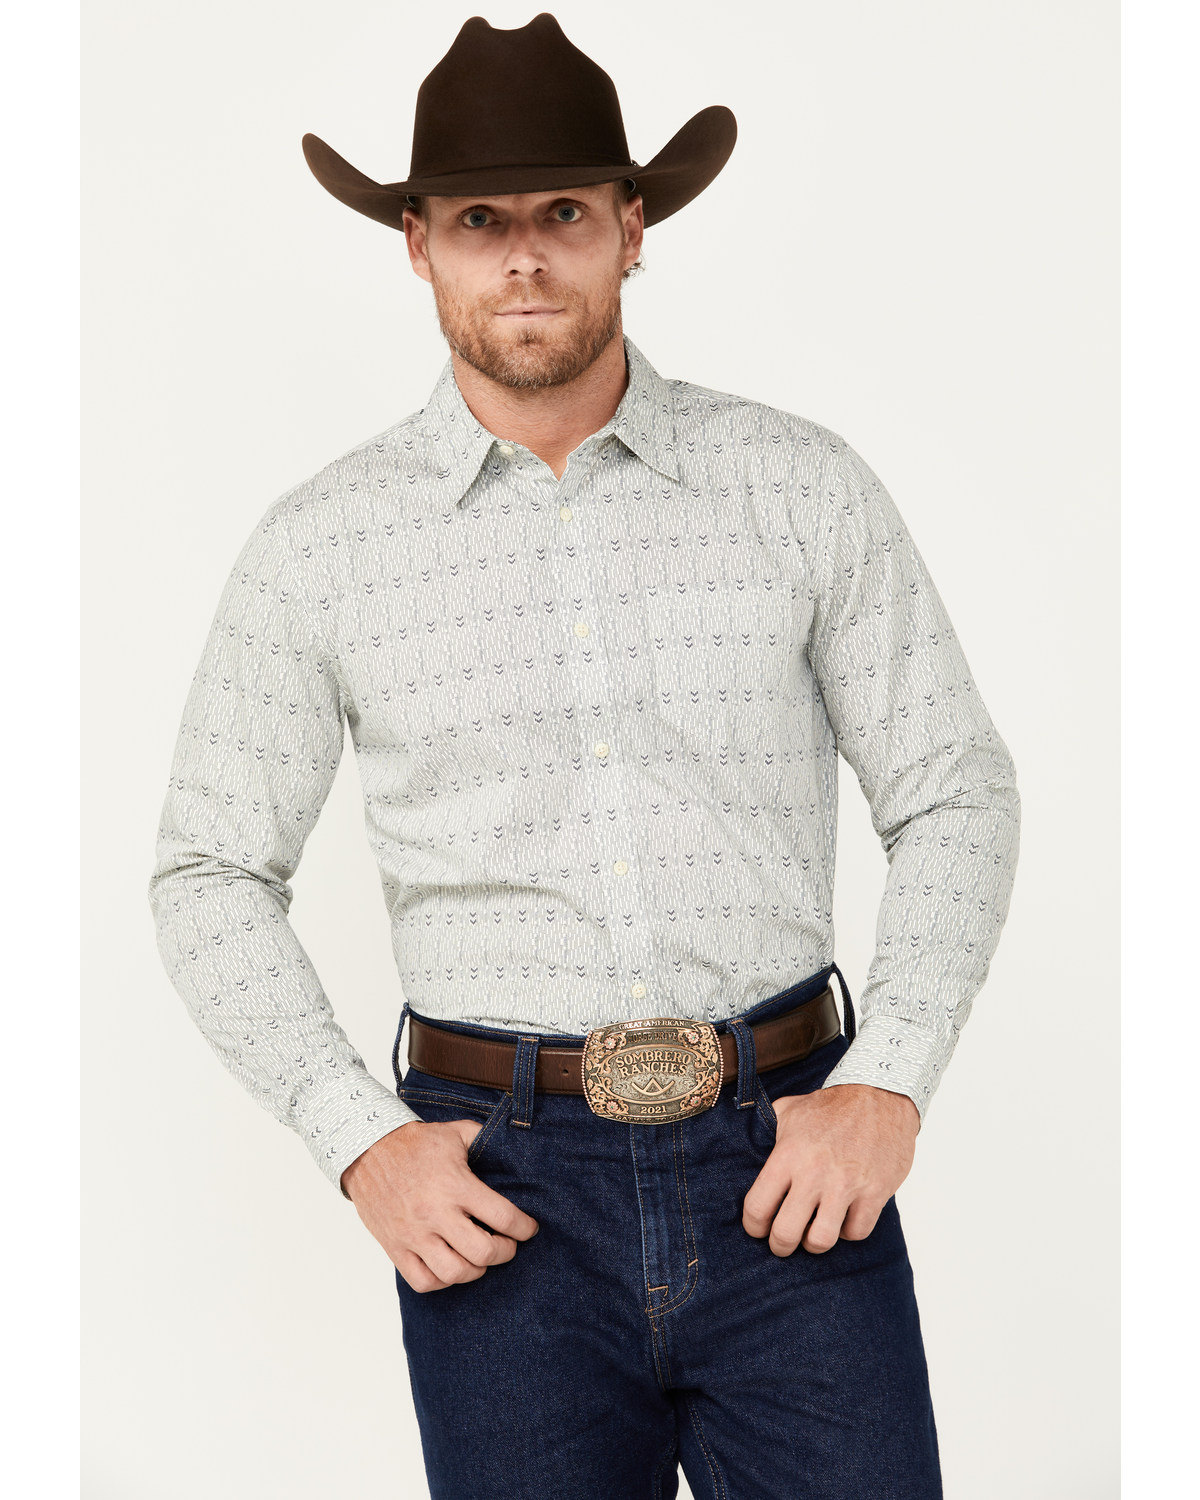 Gibson Trading Co Men's Arrow Down Southwestern Striped Print Long Sleeve Button-Down Western Shirt